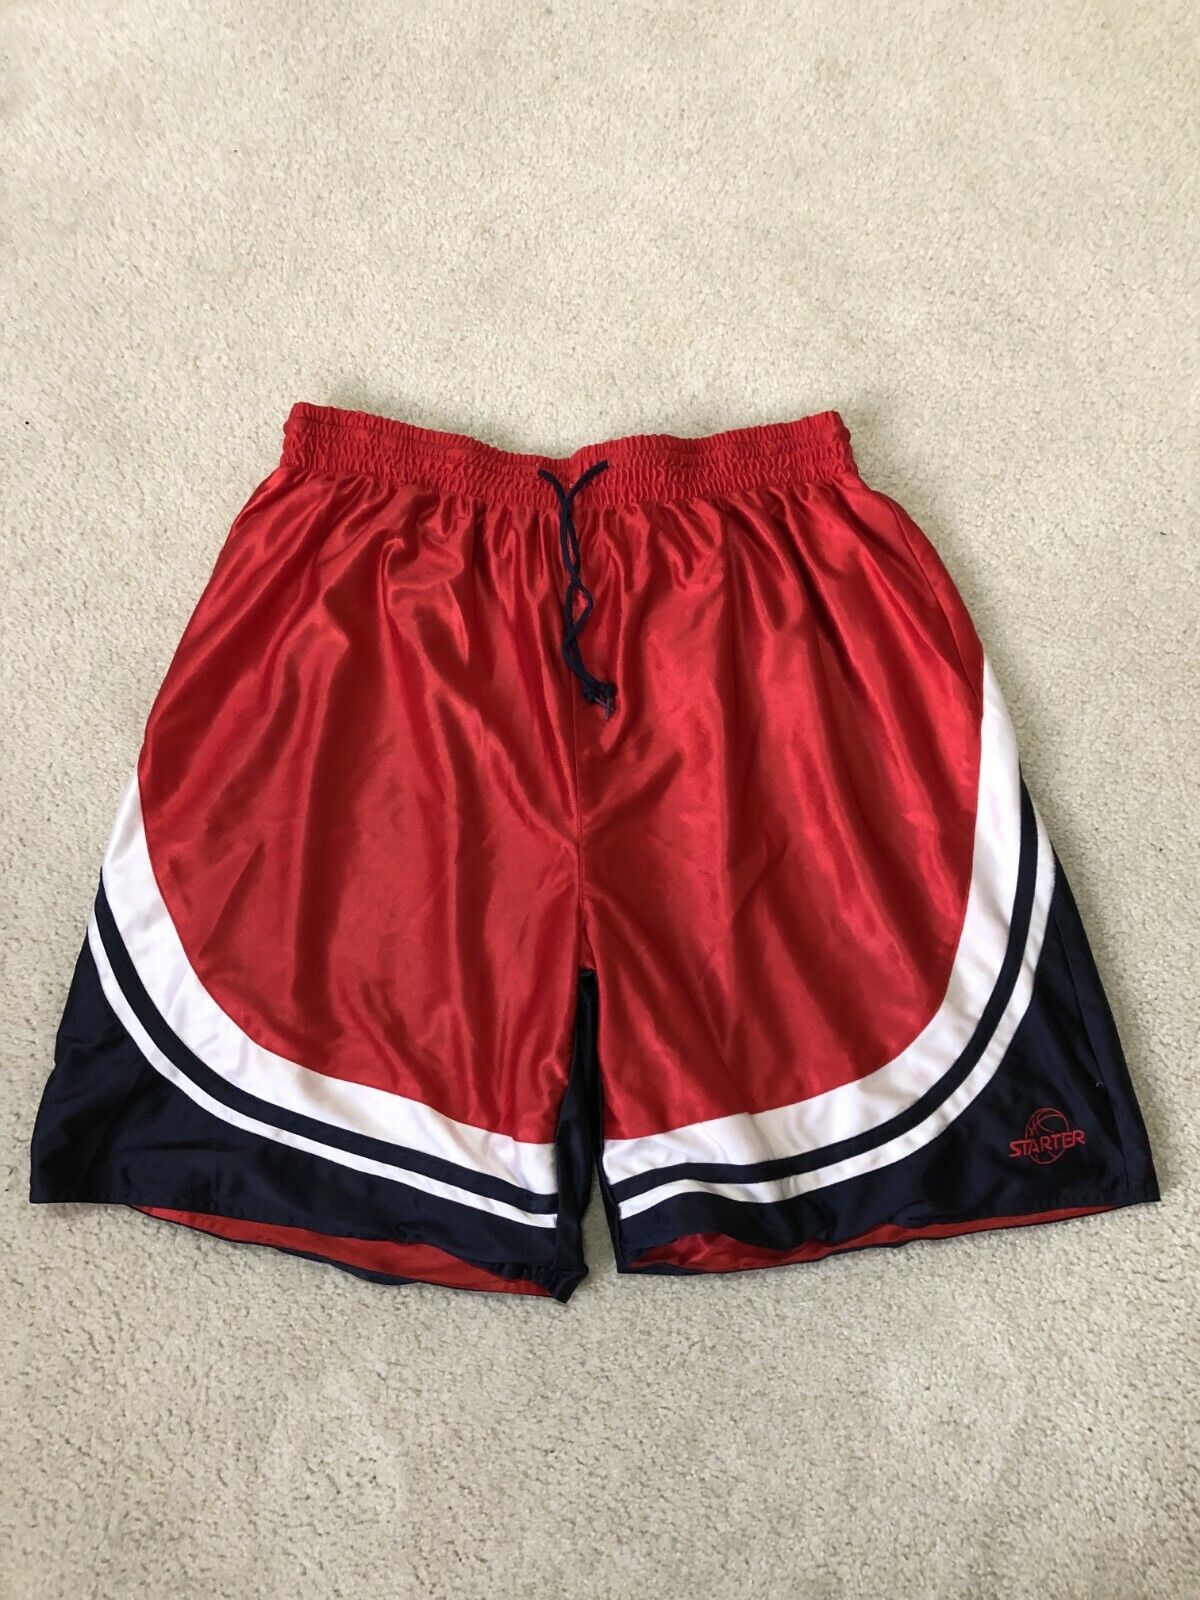 Starter Basketball Shorts Embroidered XL Reversib… - image 1